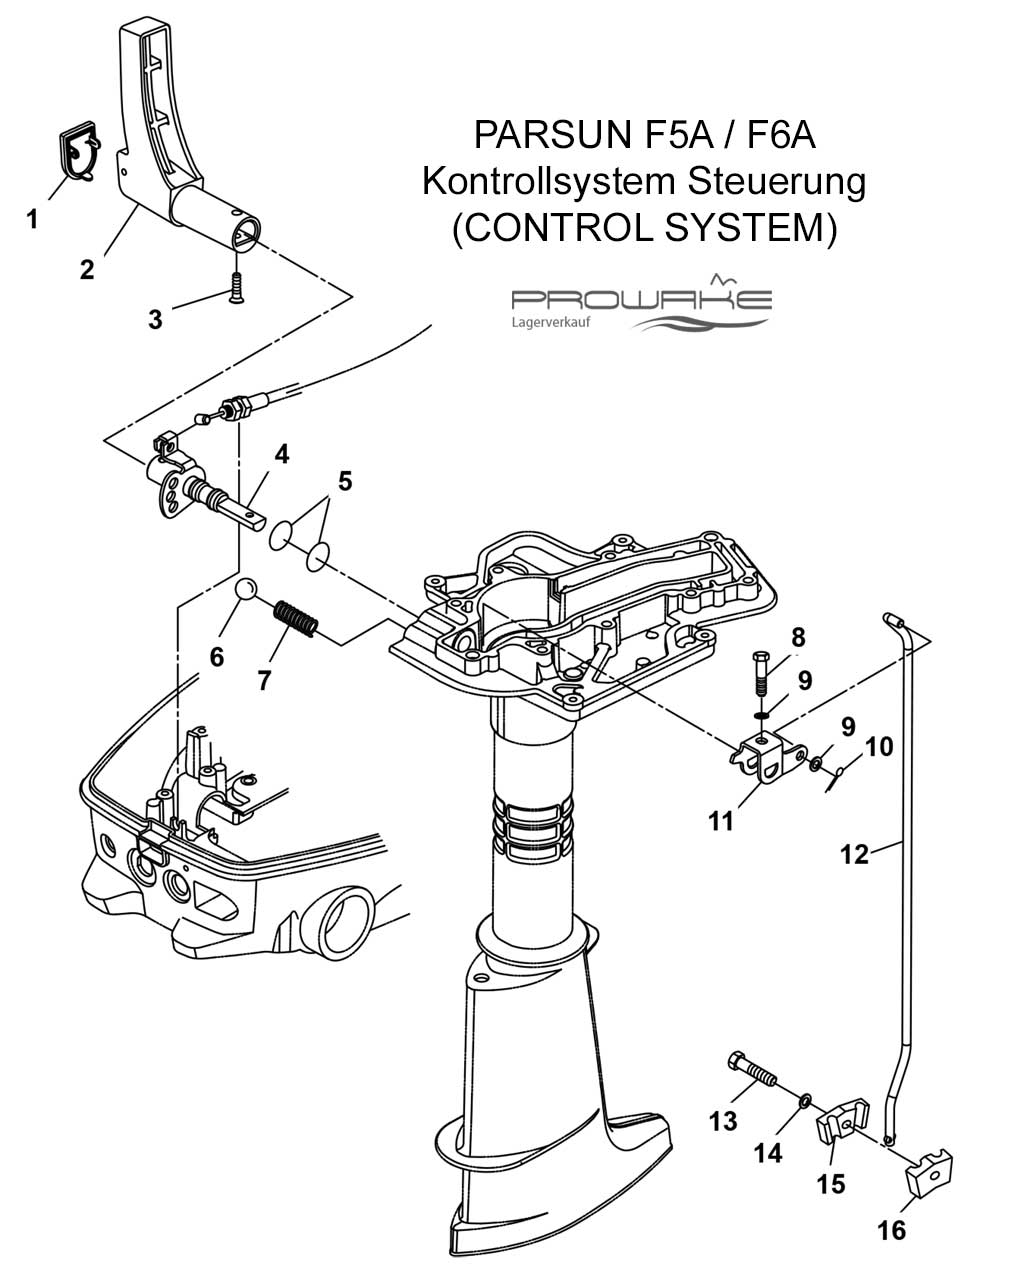 Parsun F6A  Ersatzteile / Spare Parts: Kontrollsystem